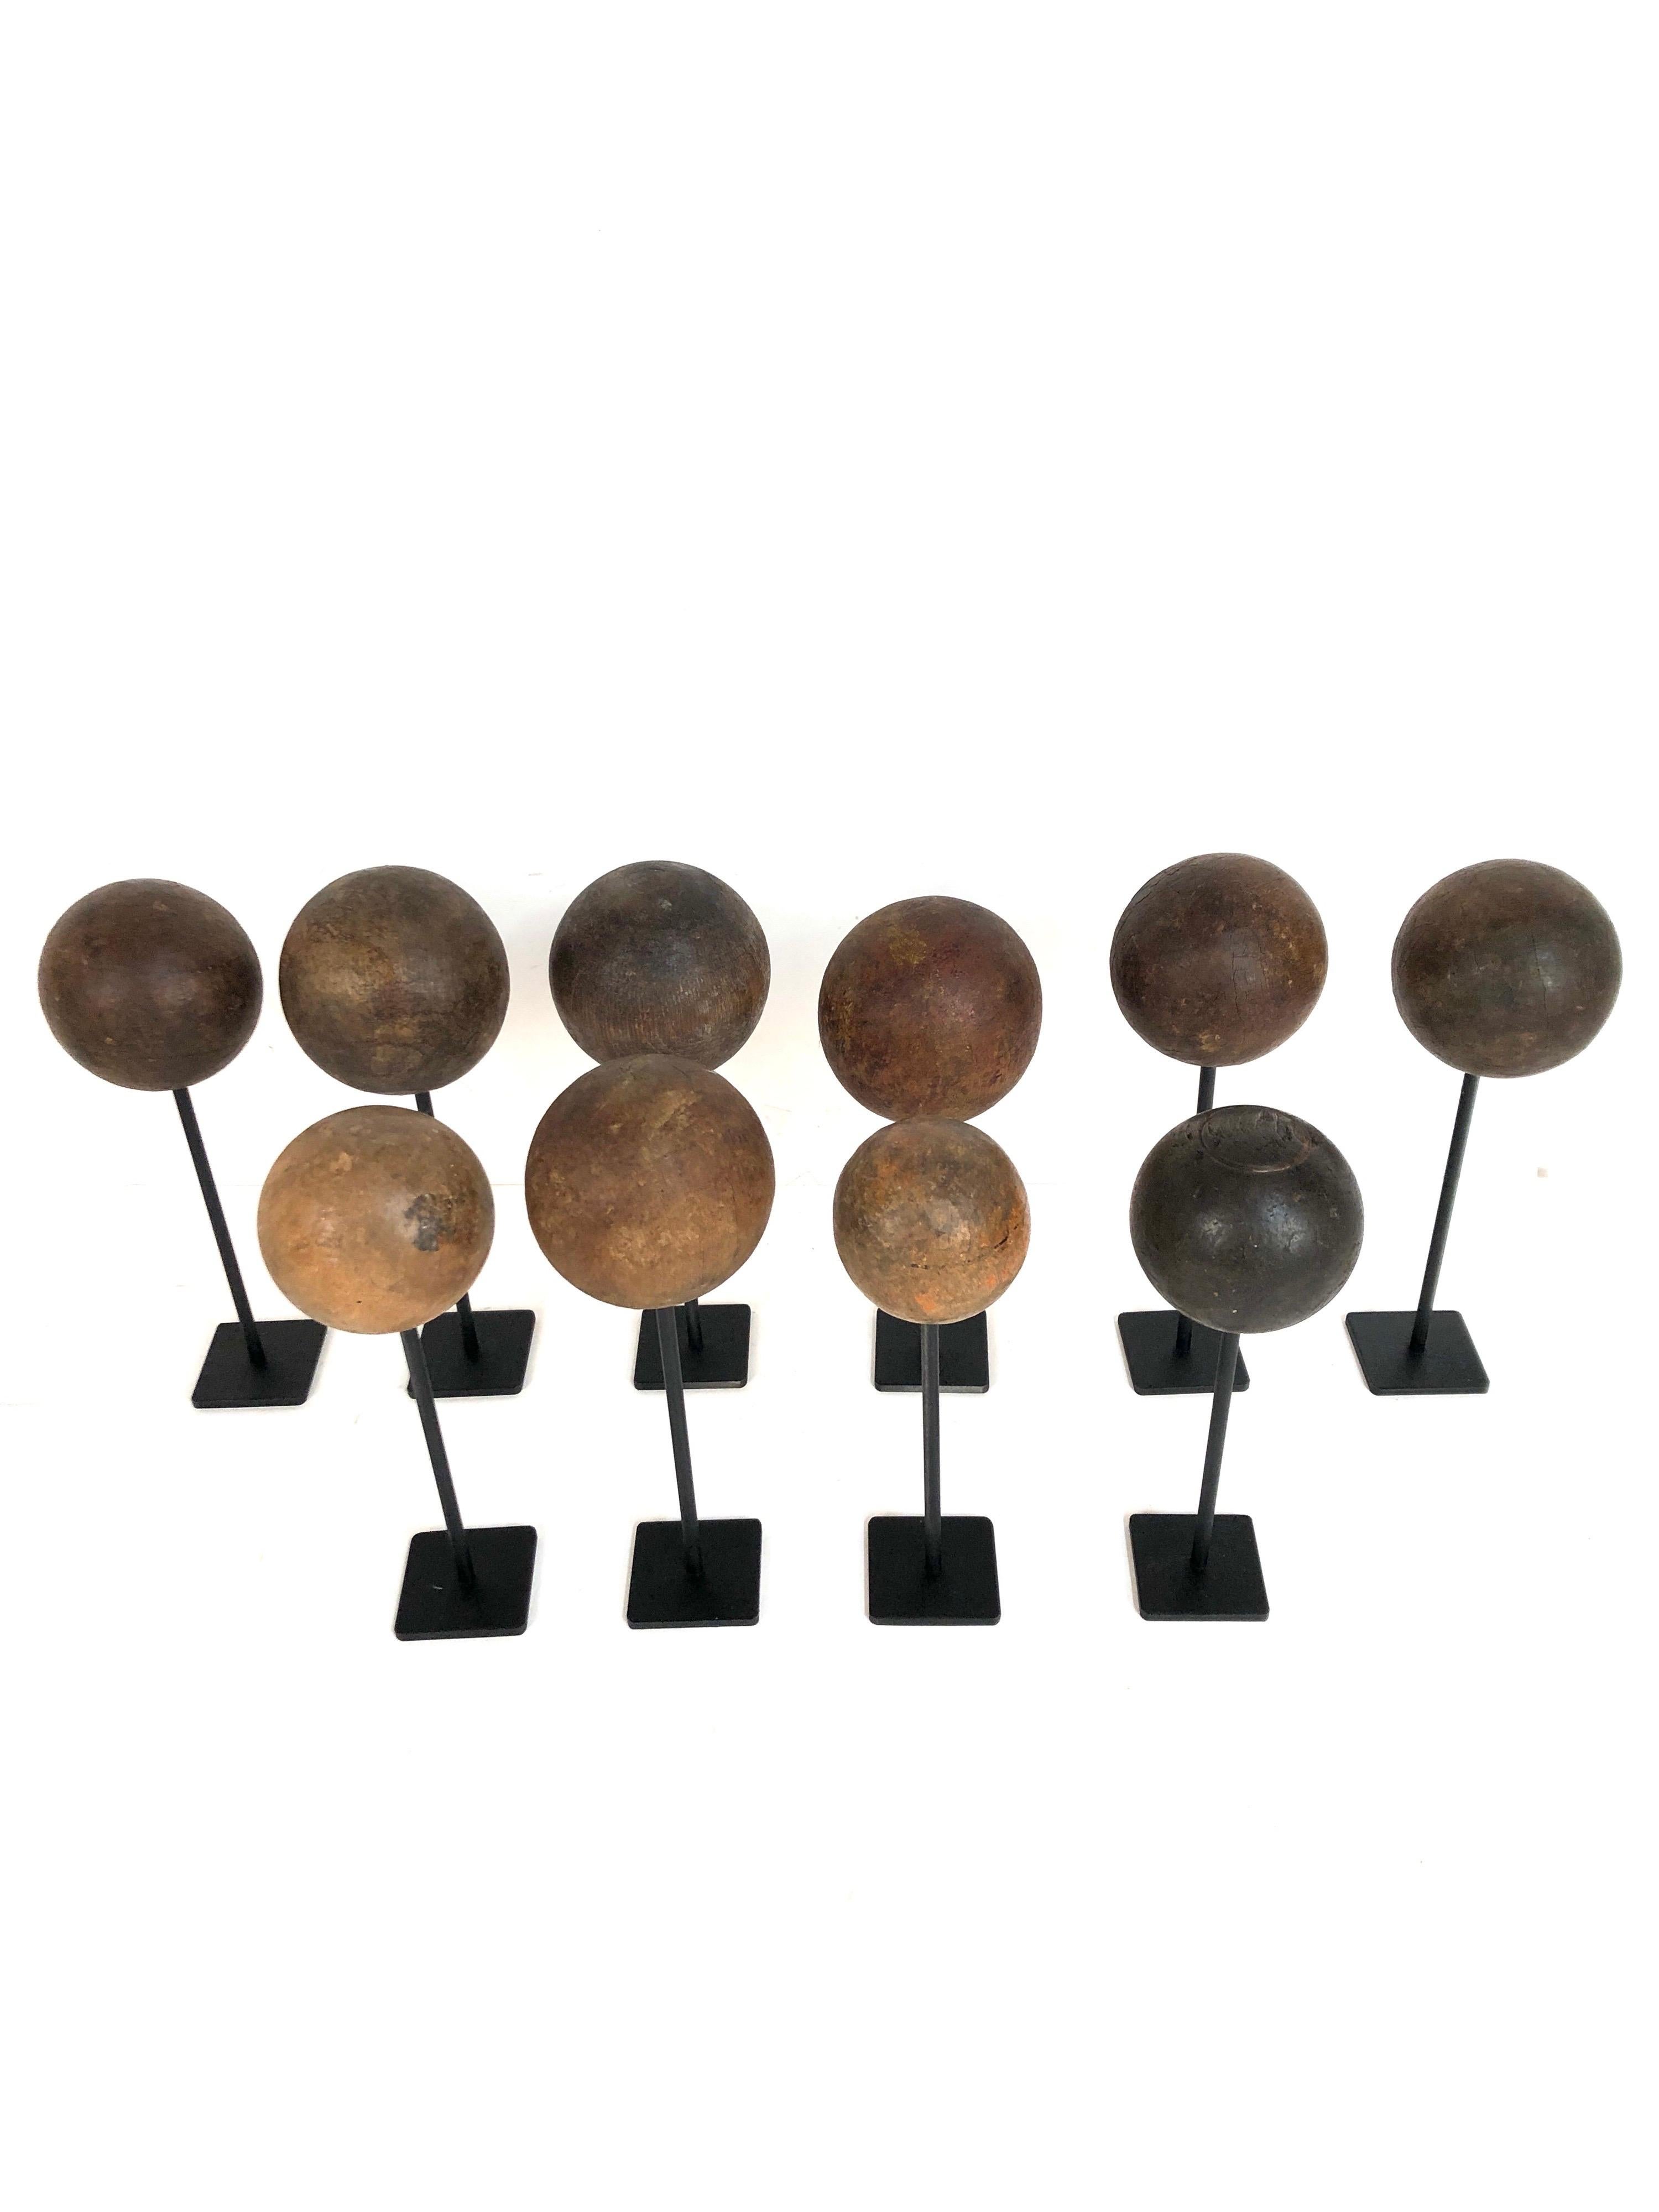 Folk Art Collection of 10 Custom Mounted Antique Wooden Balls